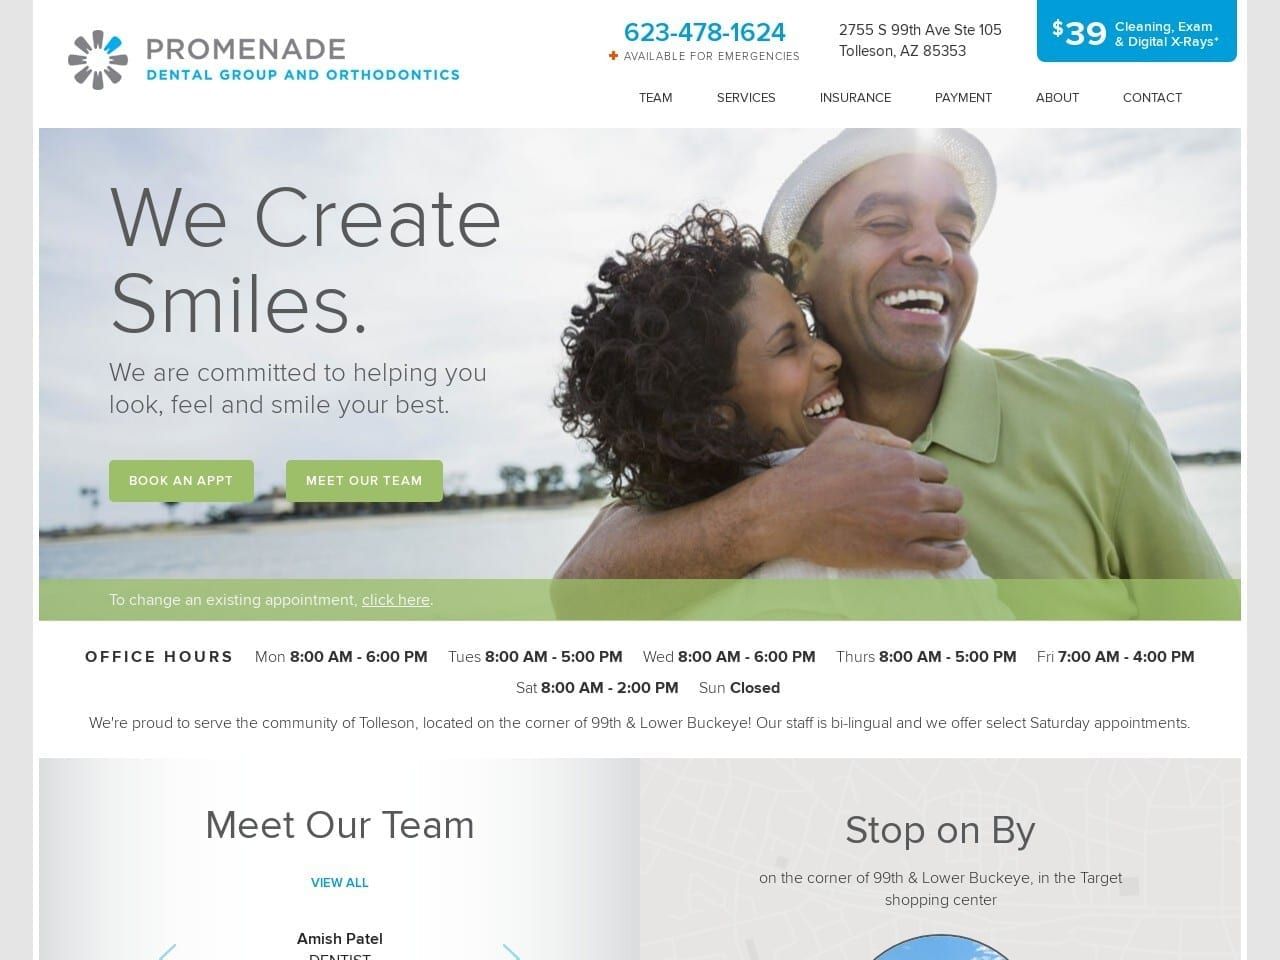 Promenade Dental Group Website Screenshot from promenadedentalgroup.com